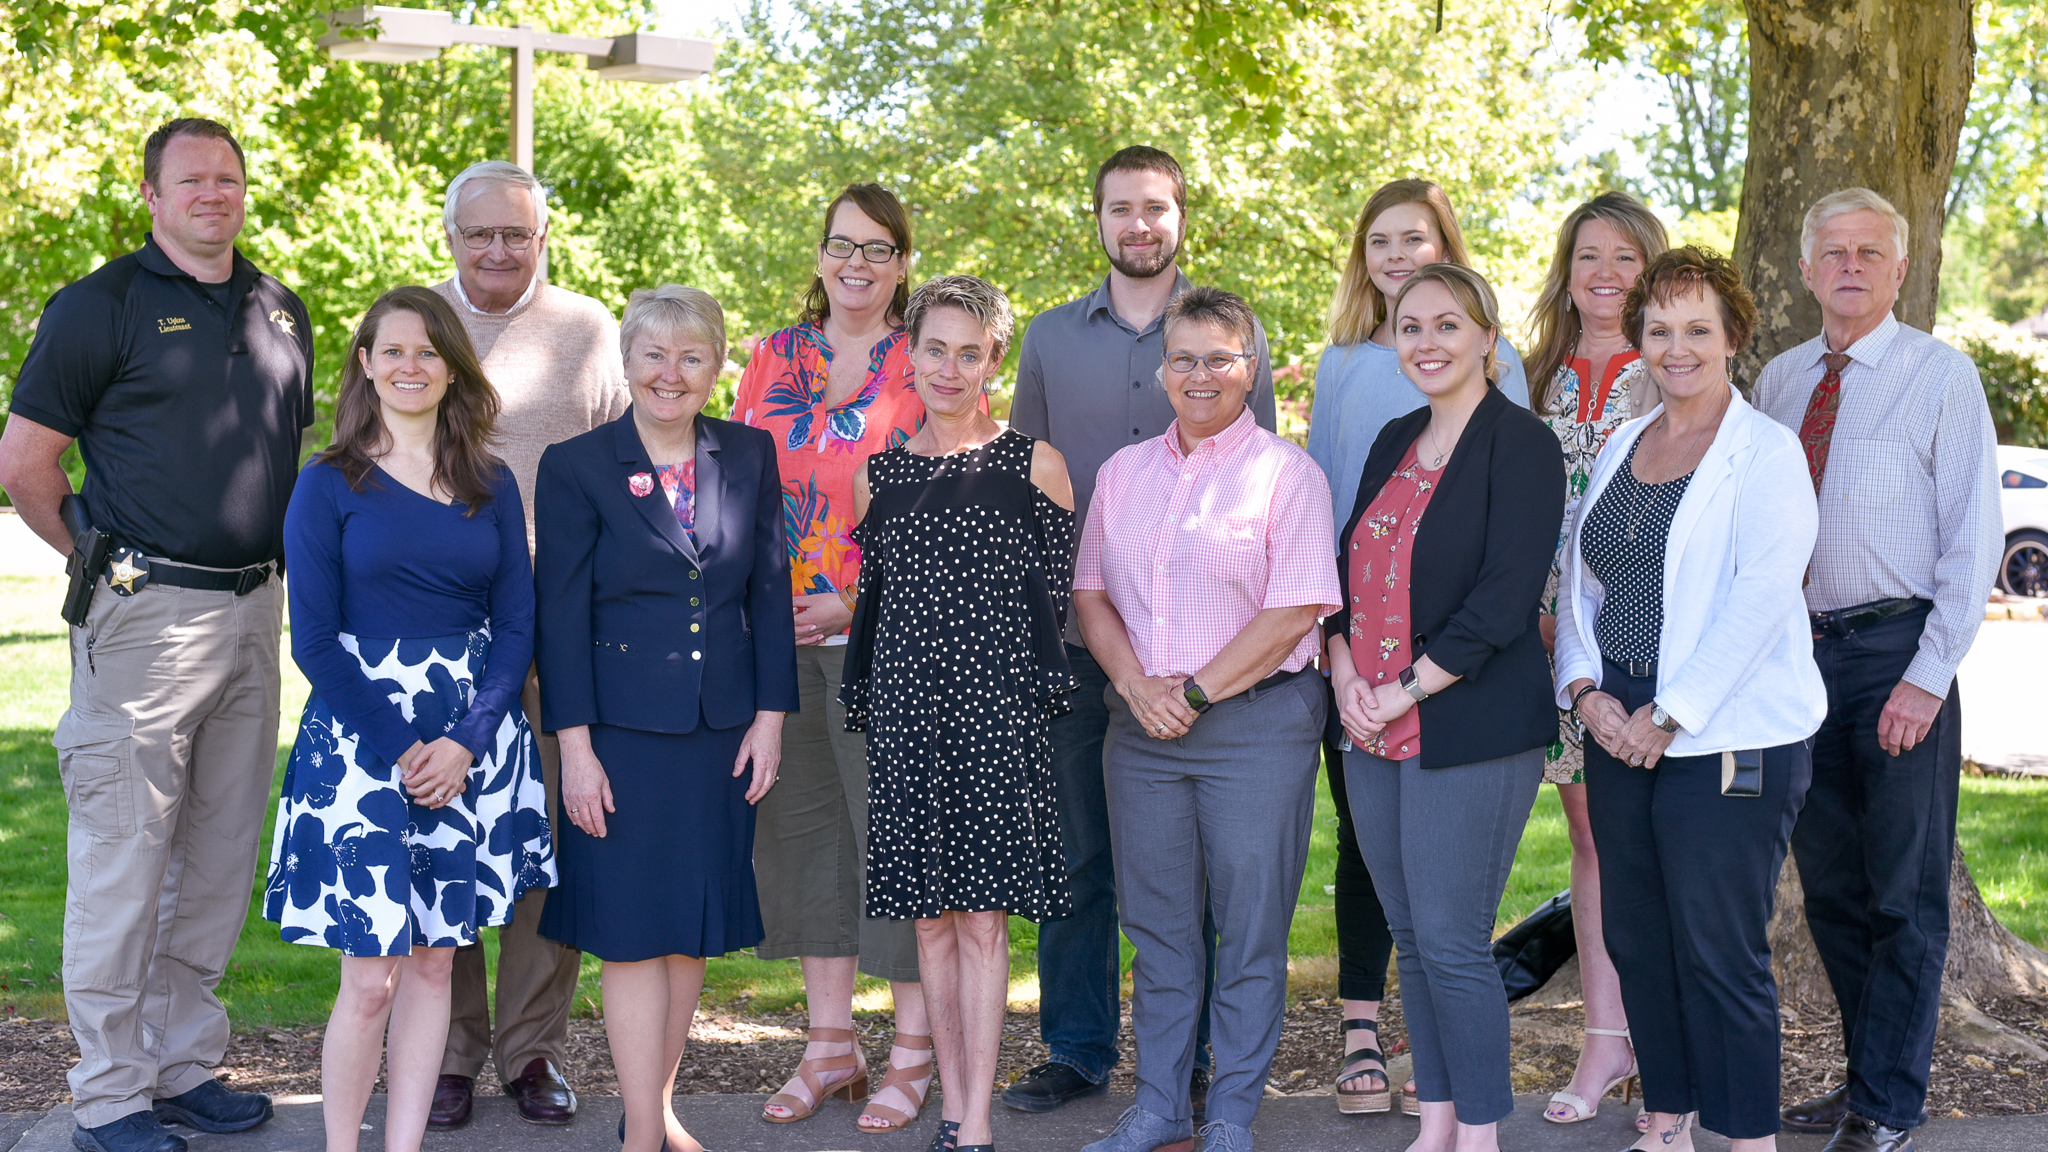 Members of the Health Advisory Board in May 2019